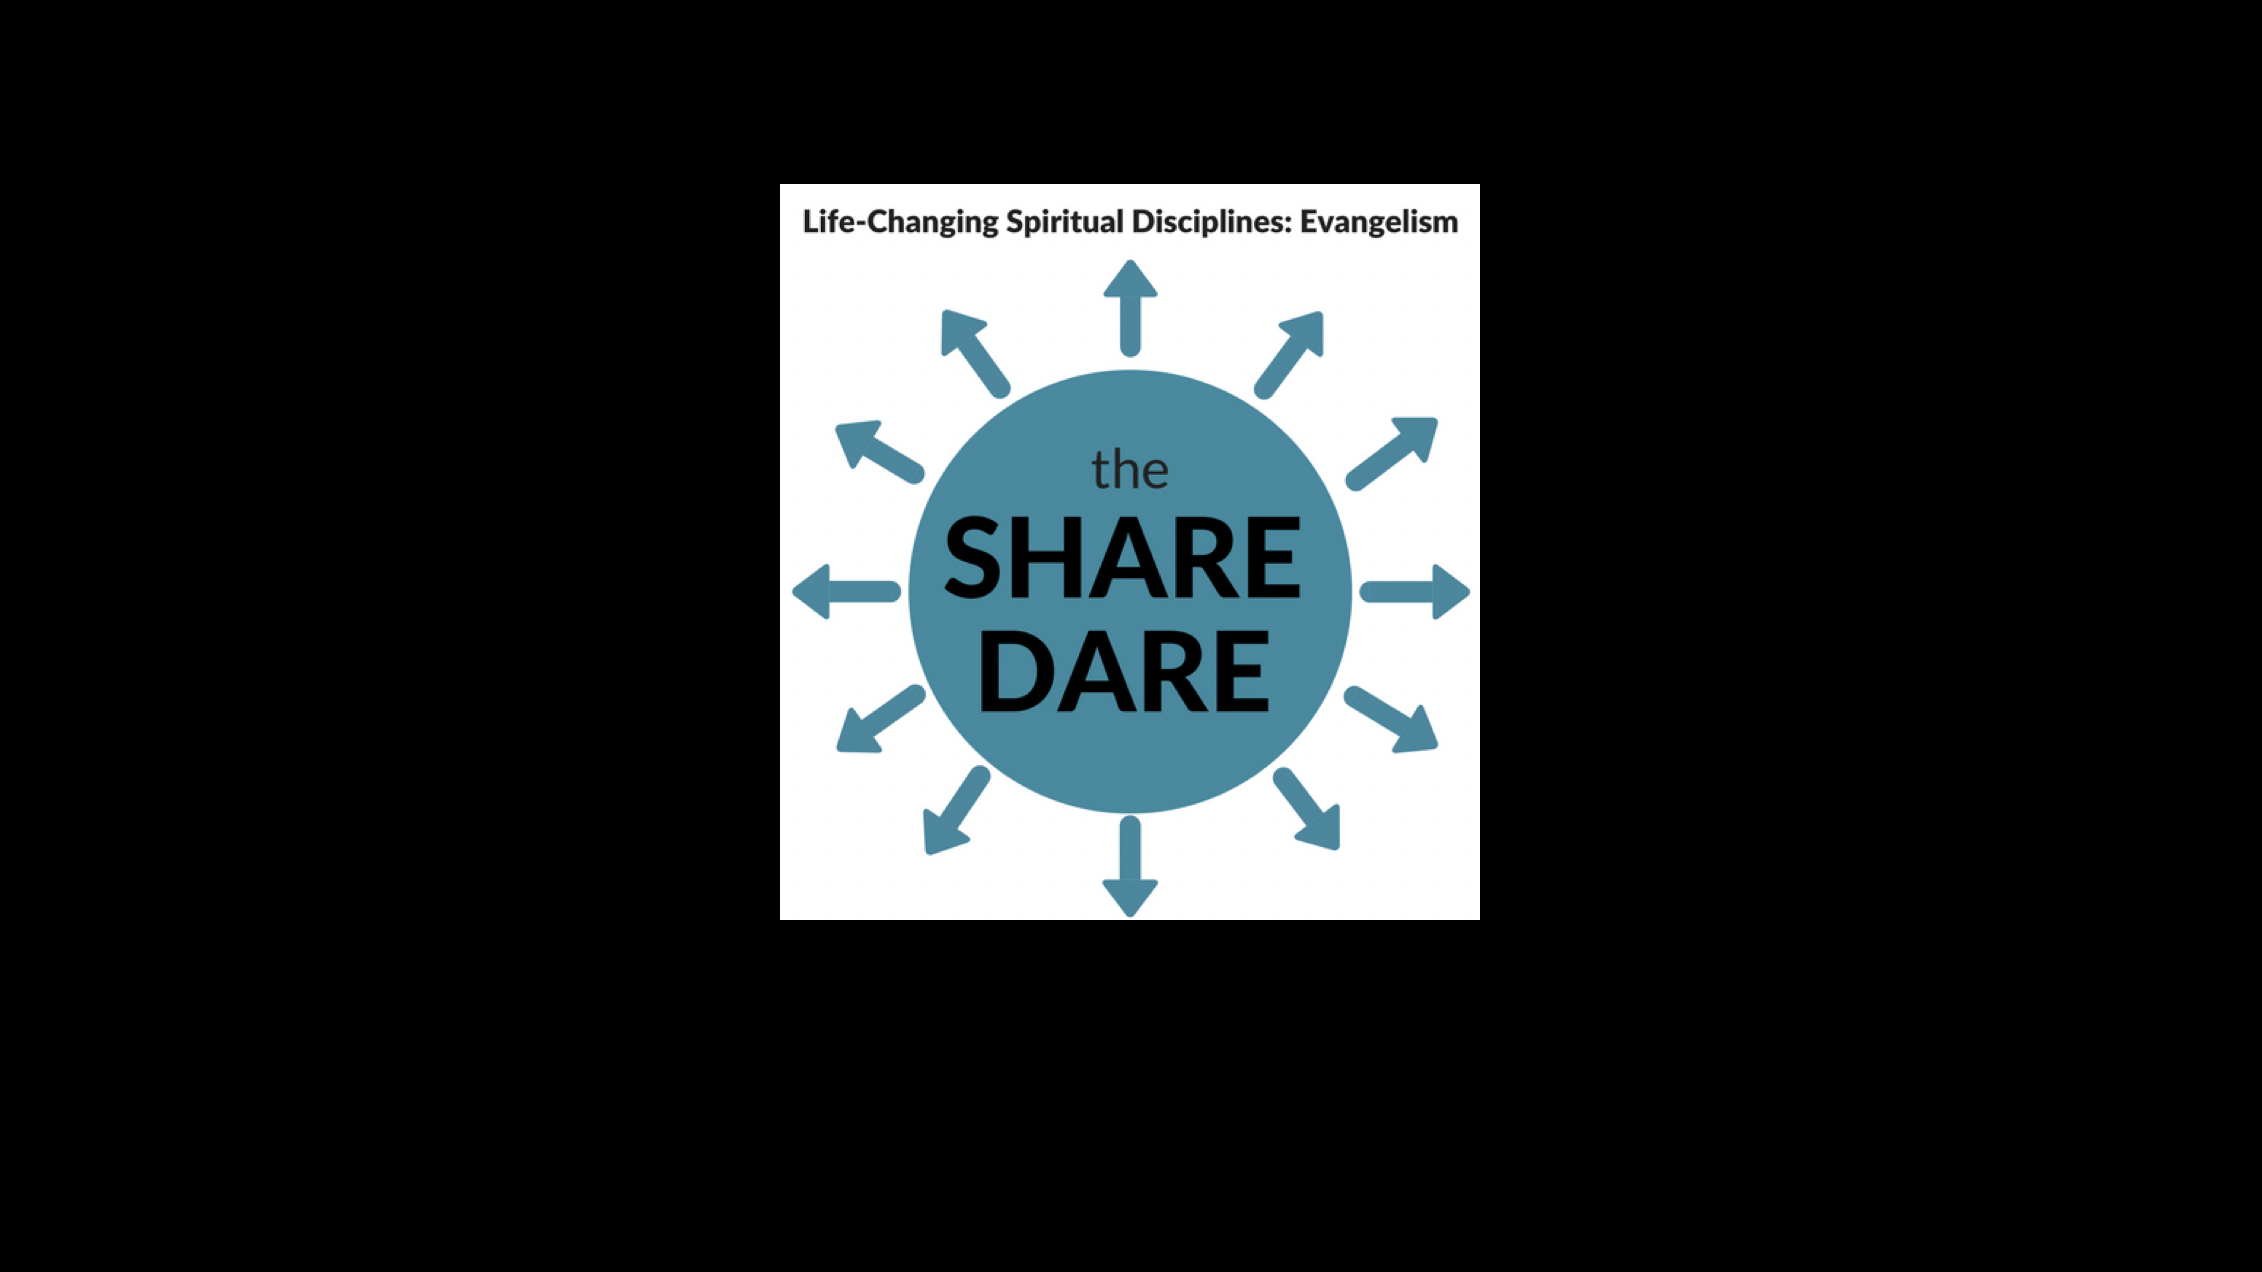 Life-Changing Spiritual Disciplines: Evangelism - The Share Dare! (Part 1) | John Black | 03-19-17